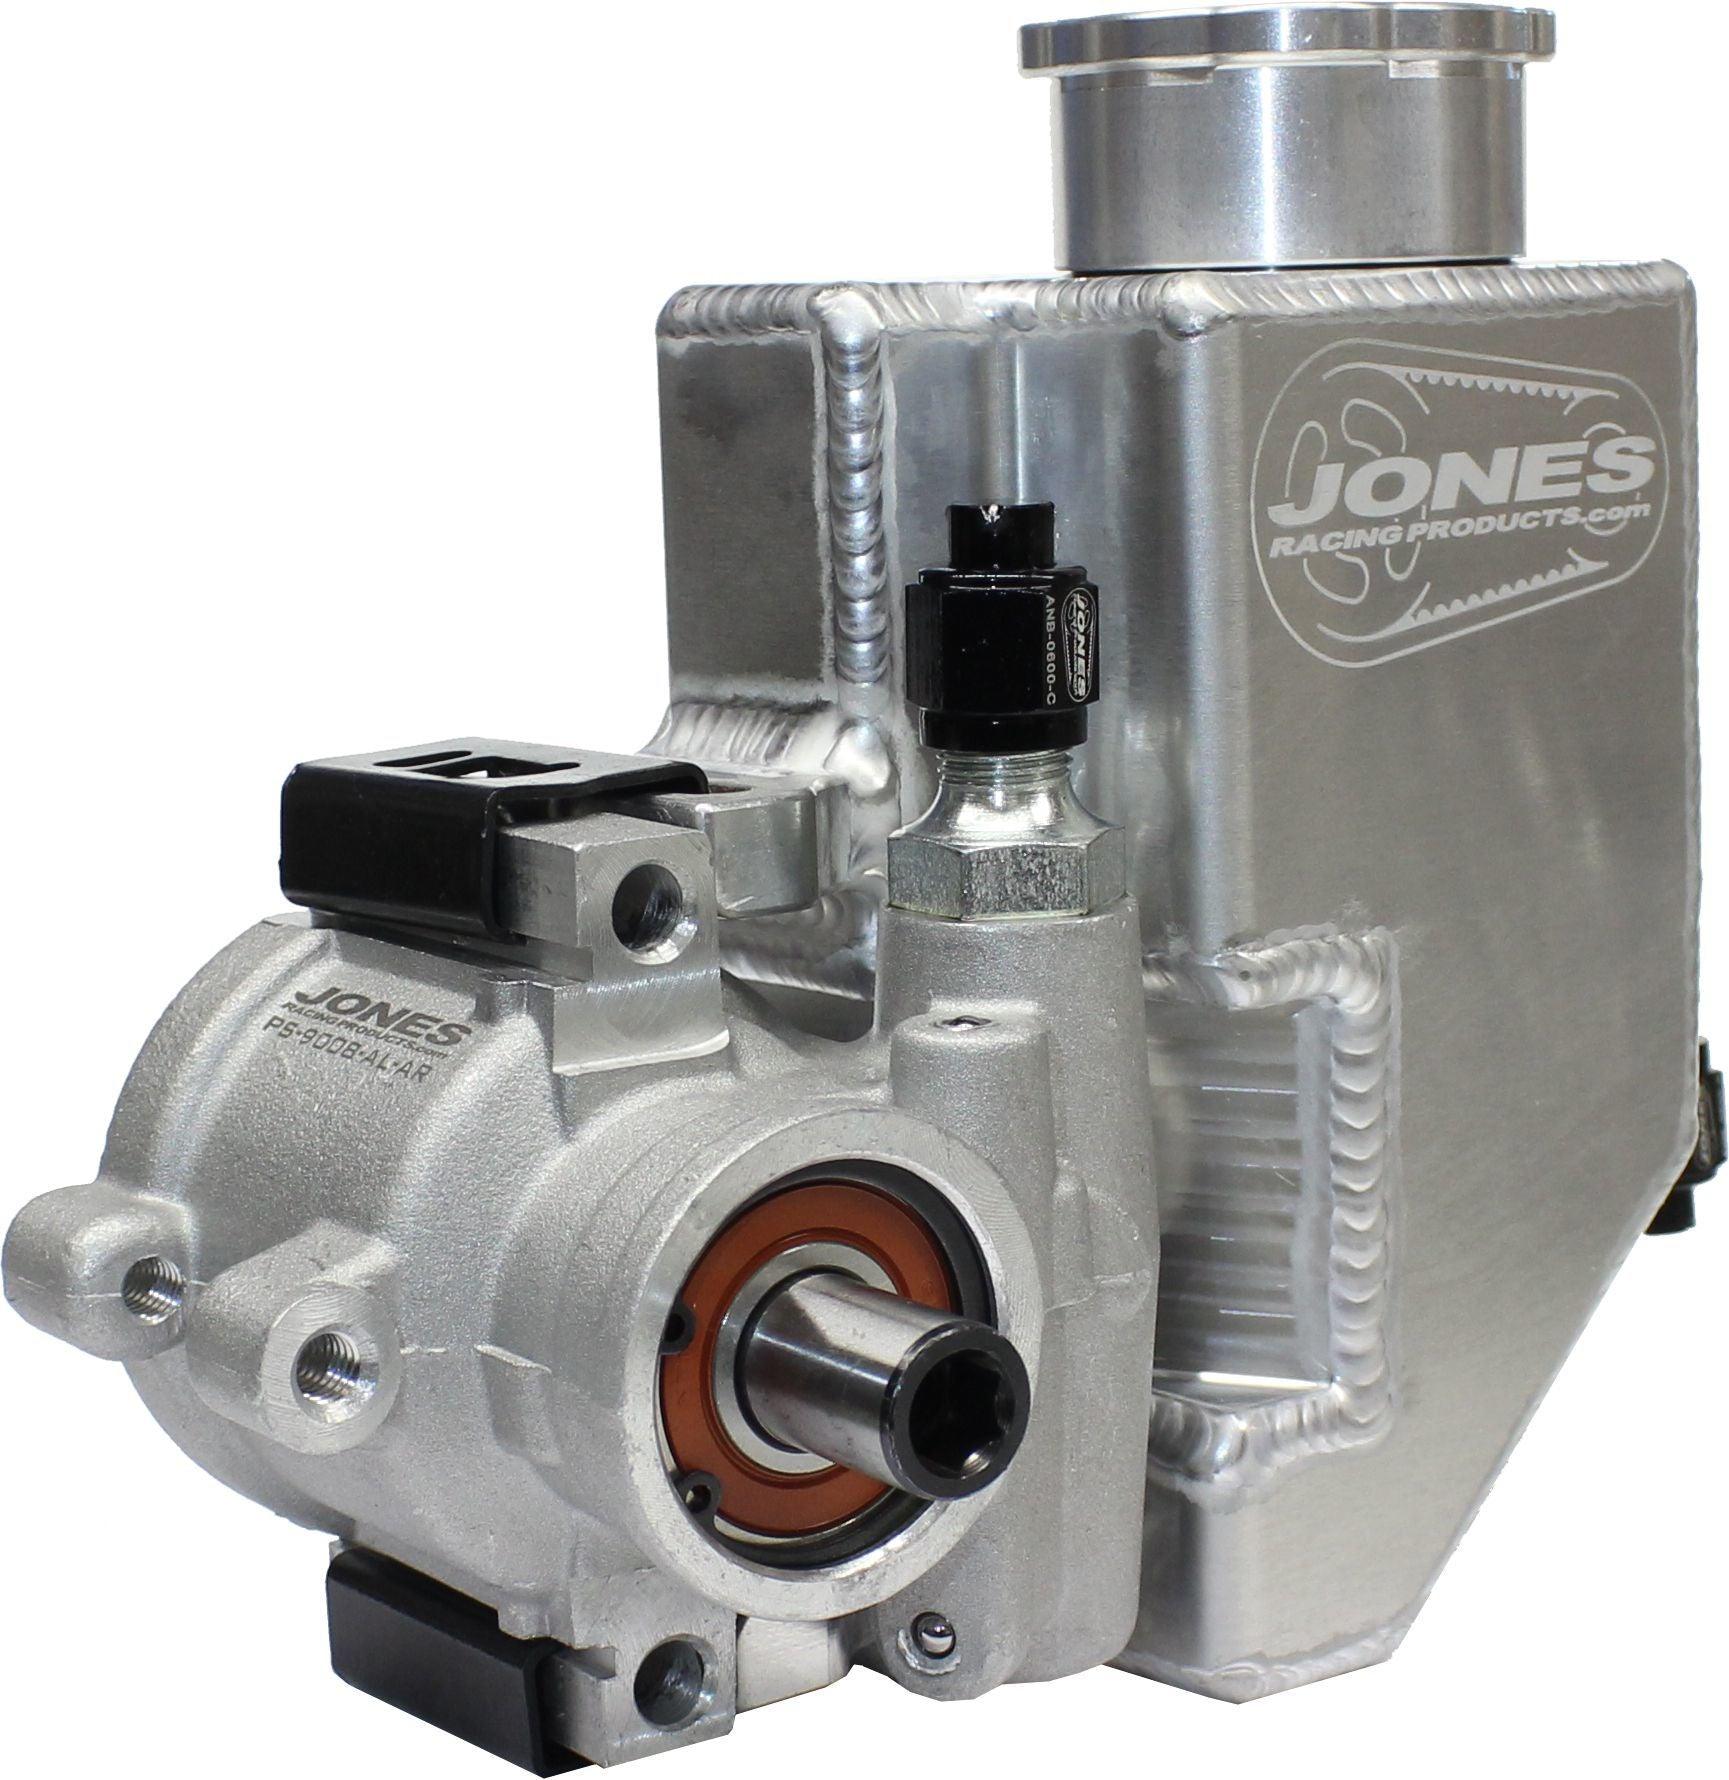 Alum Mini P/S Pump with Alum Reservoir - Burlile Performance Products